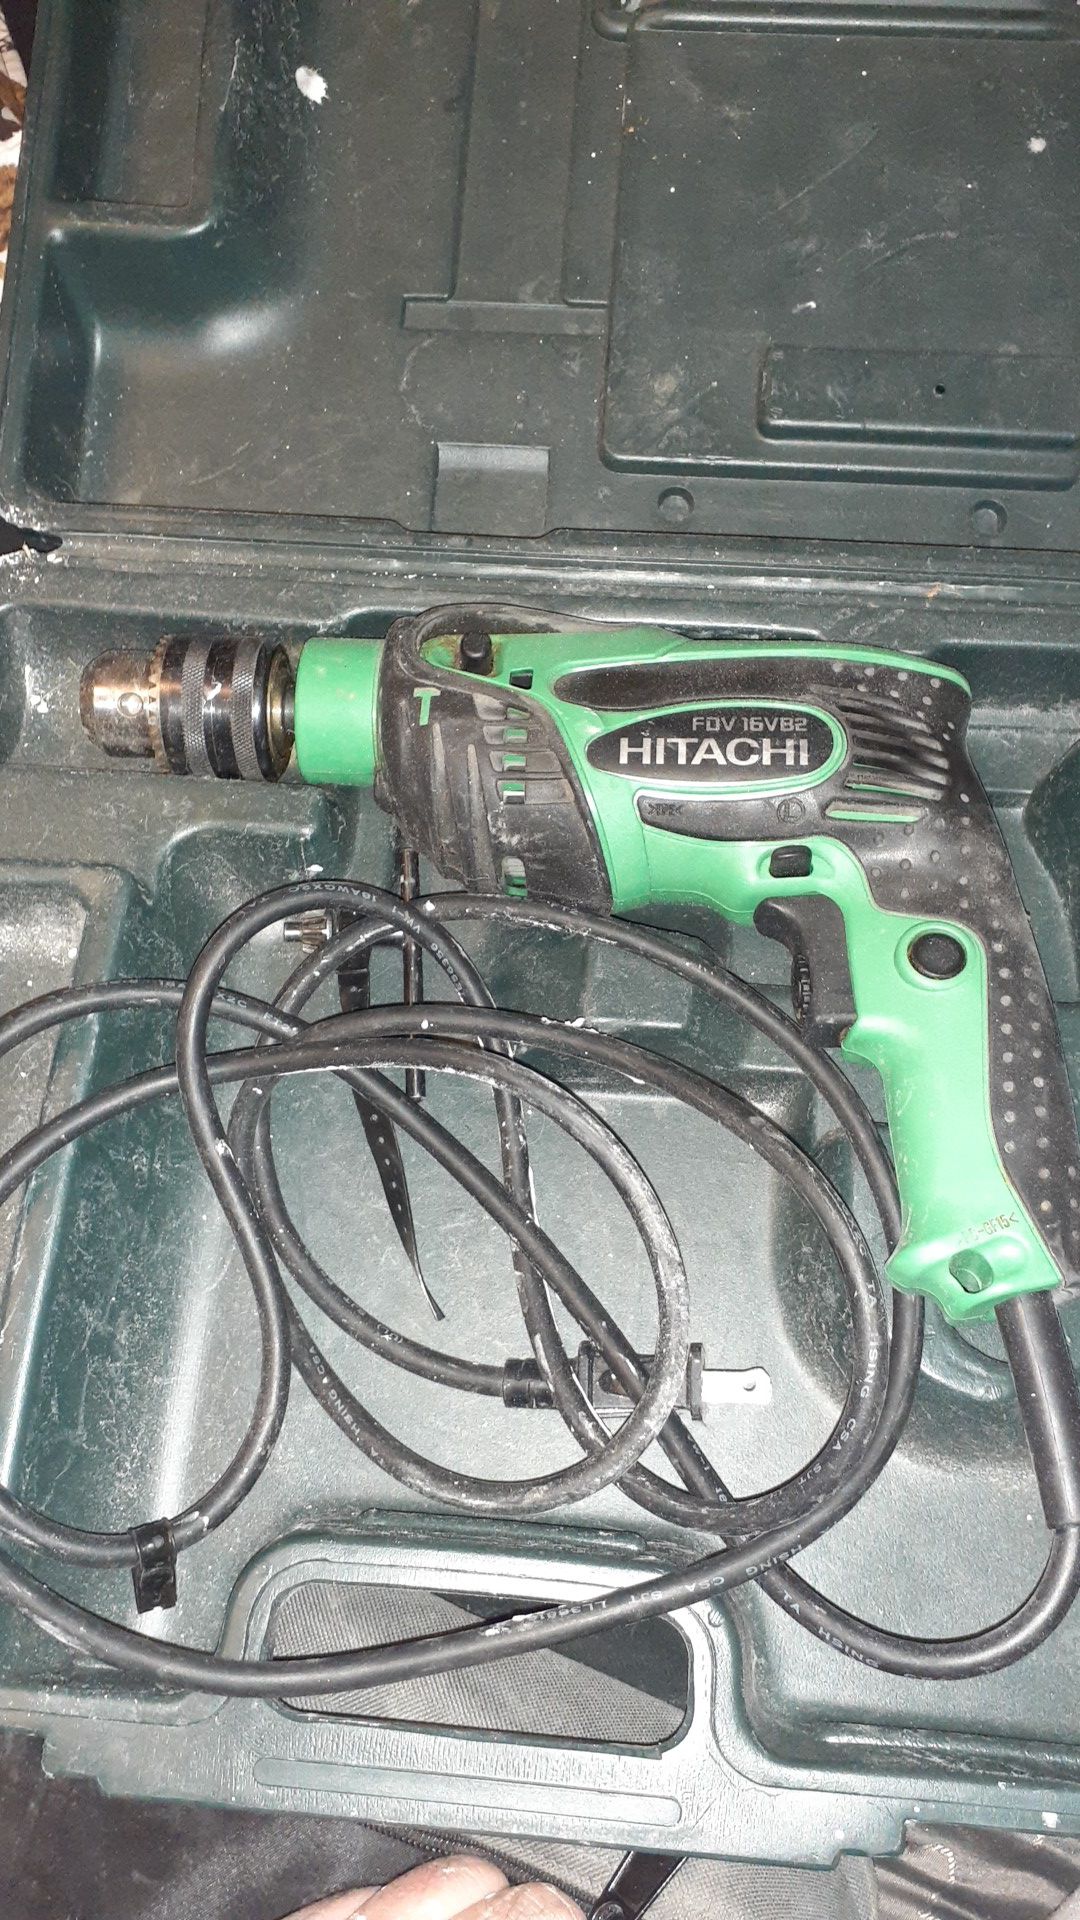 Hitachi 1/2 inch hammer drill